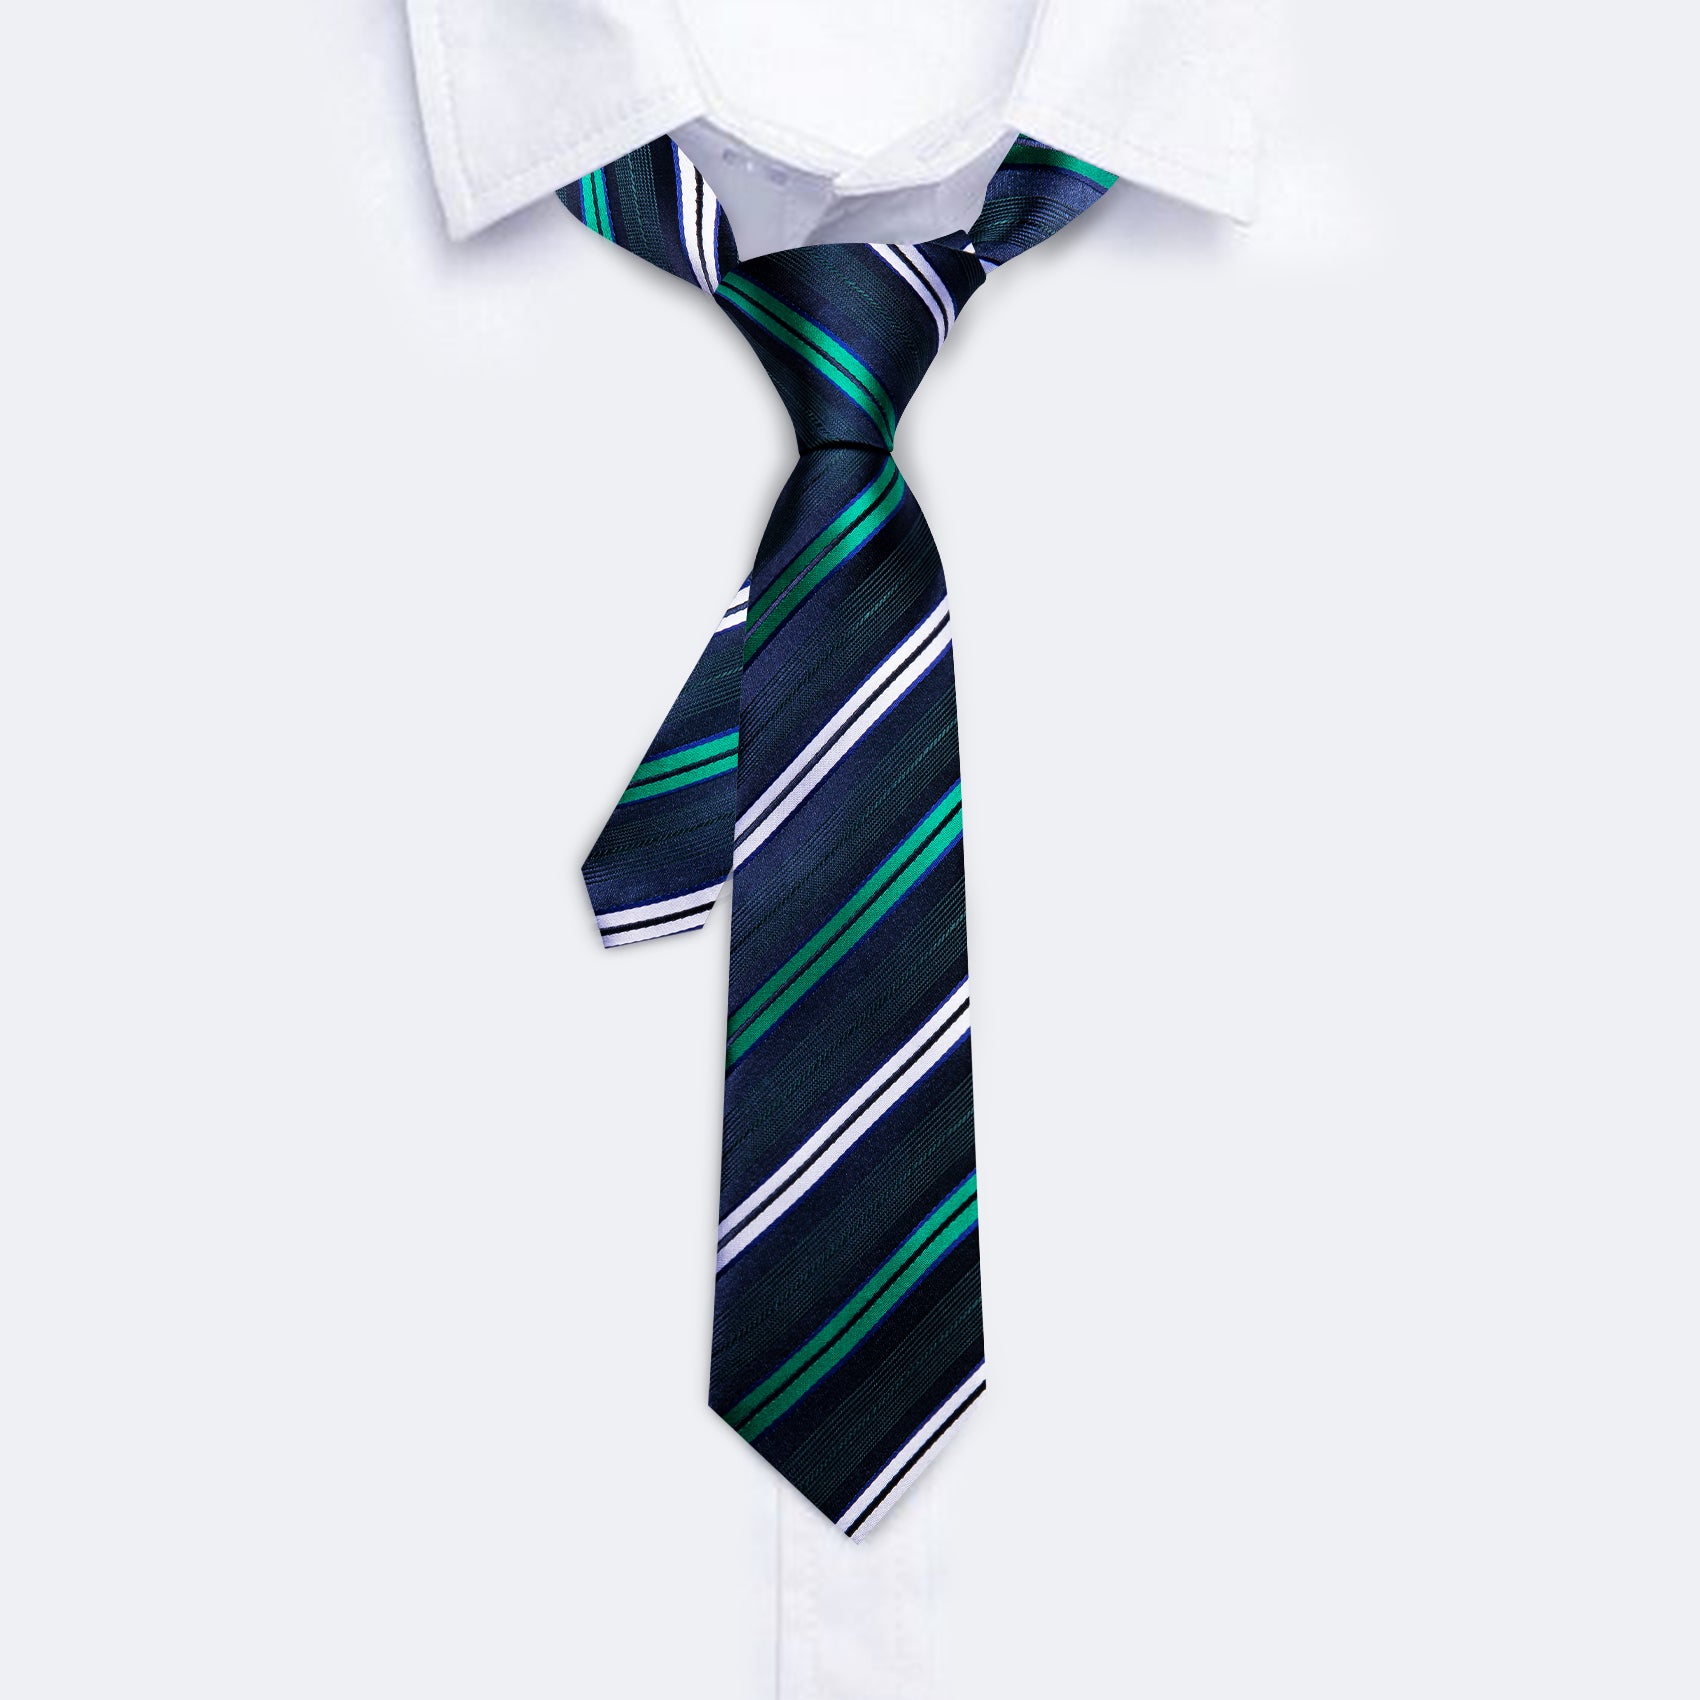 Barry.wang Kids Tie Children Blue White Striped Tie Pocket Square Set